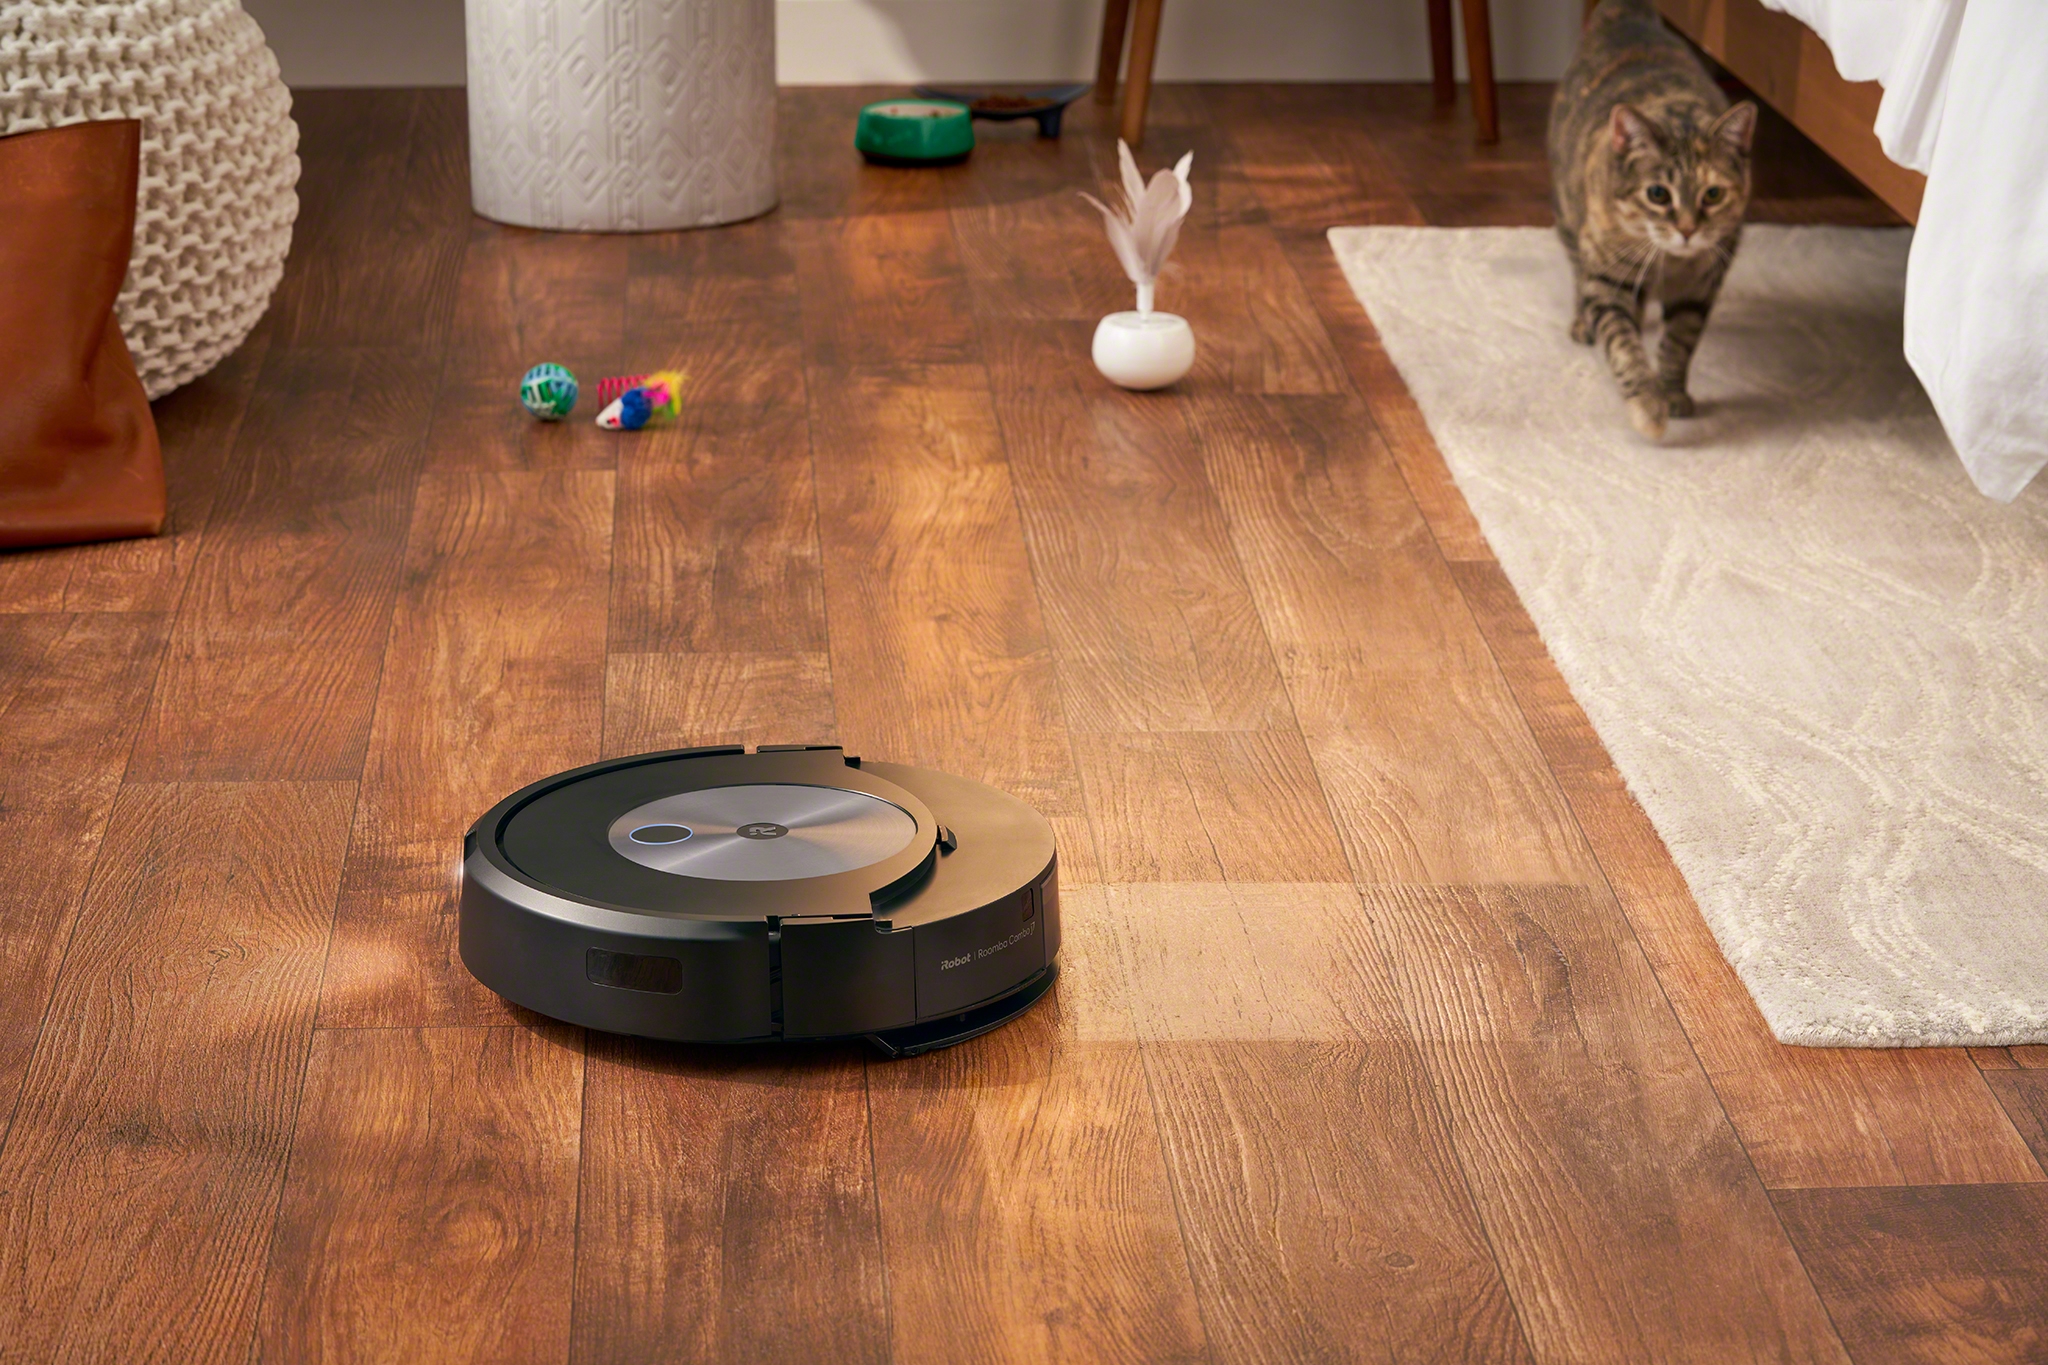 iRobot Roomba Combo j7+ Review: Beautiful Vacuum, but